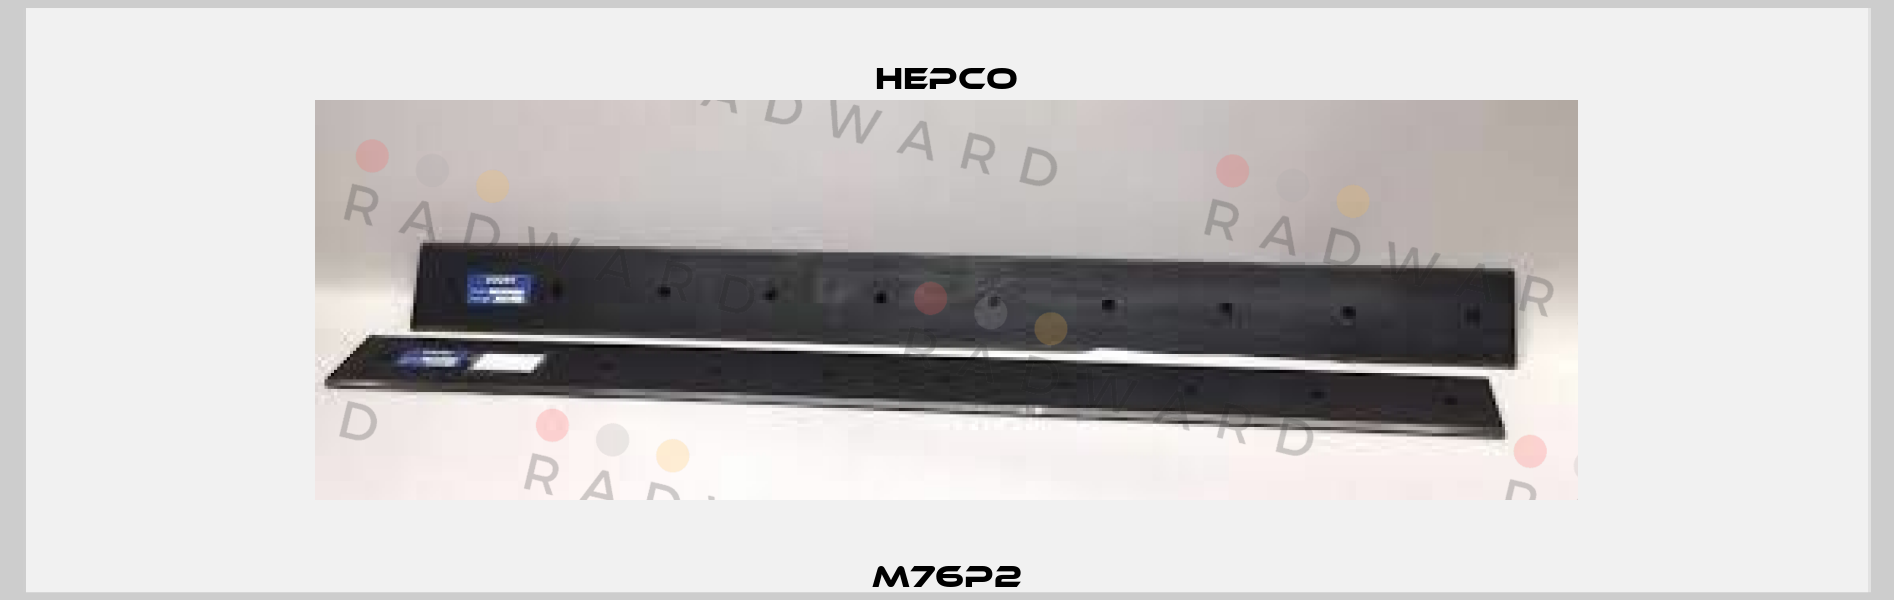 M76P2 Hepco